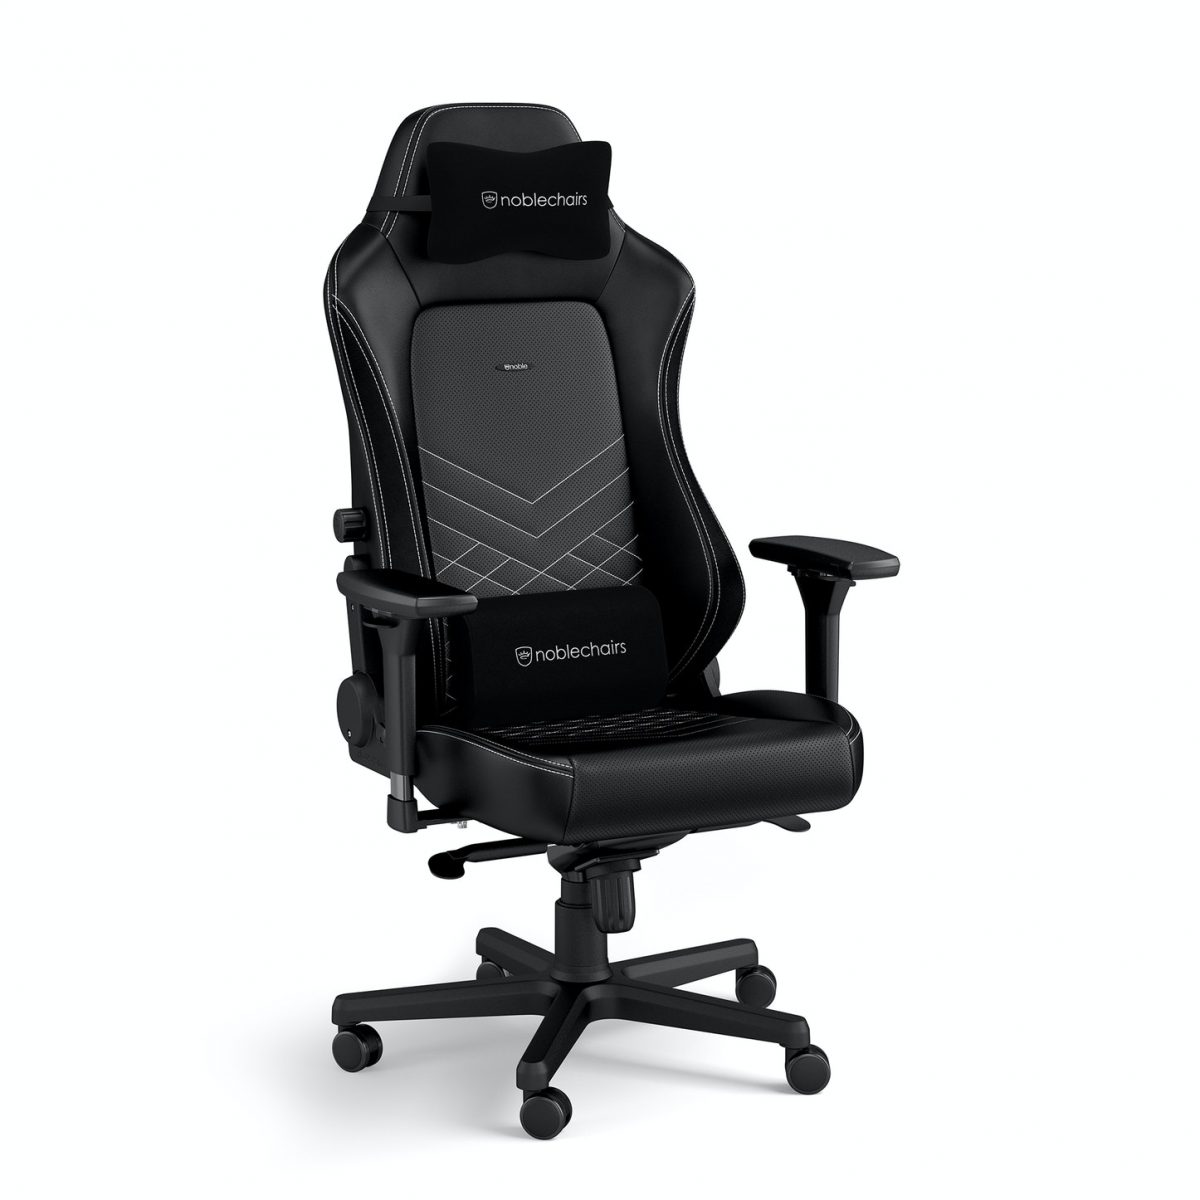 noblechairs HERO Gaming Chair - cold foam, steel armrests,  60mm casters, 150kg - black/platinum - Pro GamersWare 2.35.63.01.010